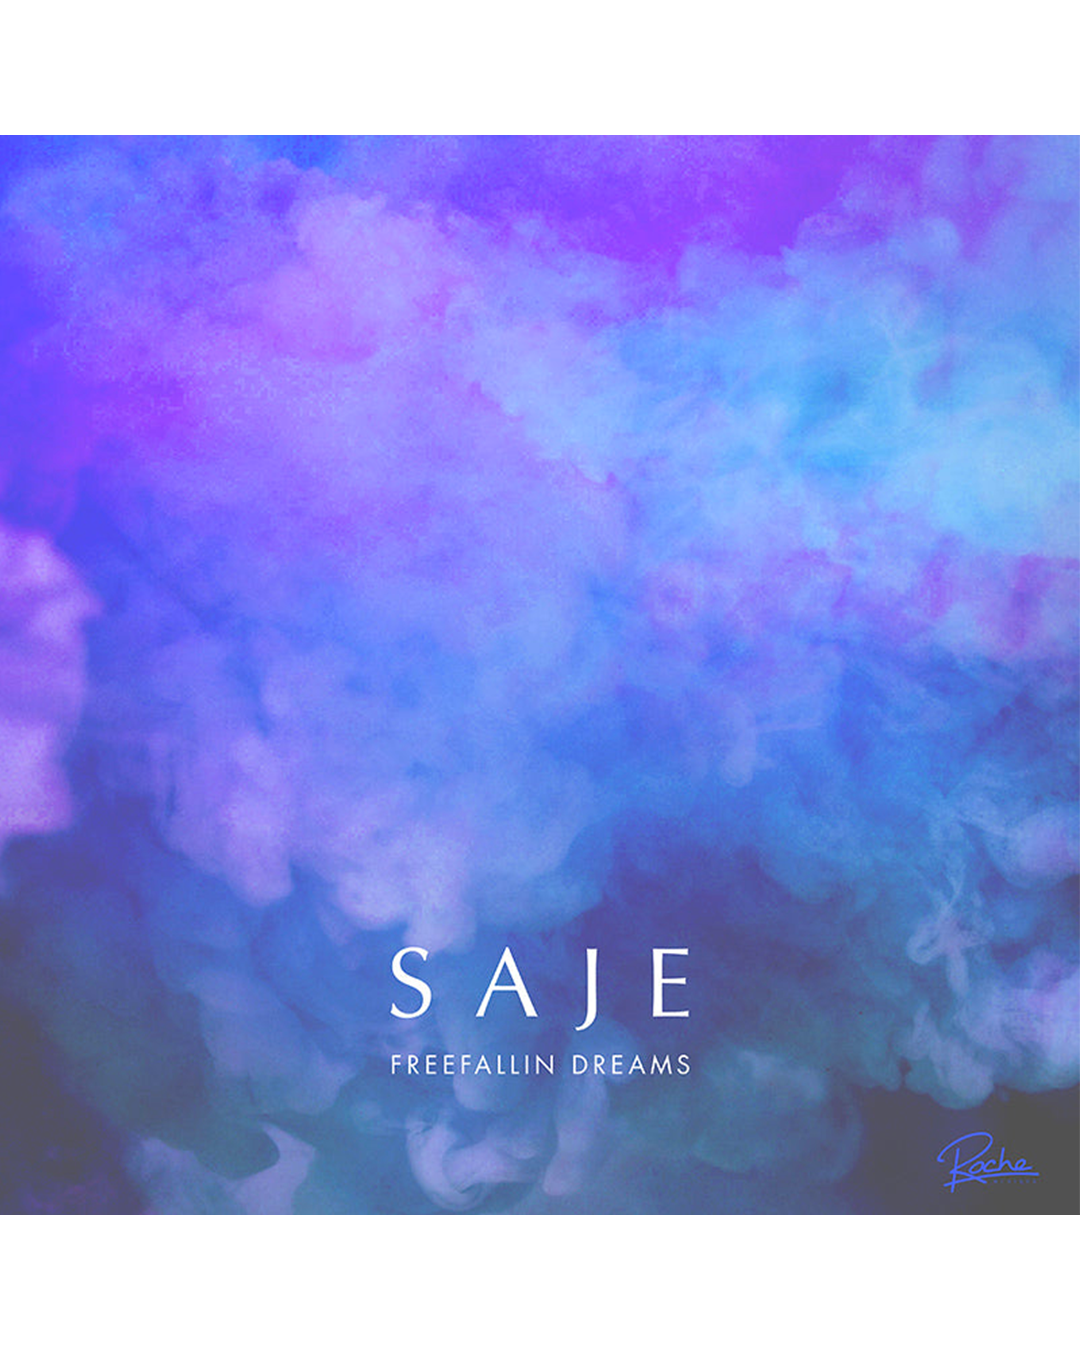 SAJE – FREEFALLIN DREAMS – VINYL 12″ EP